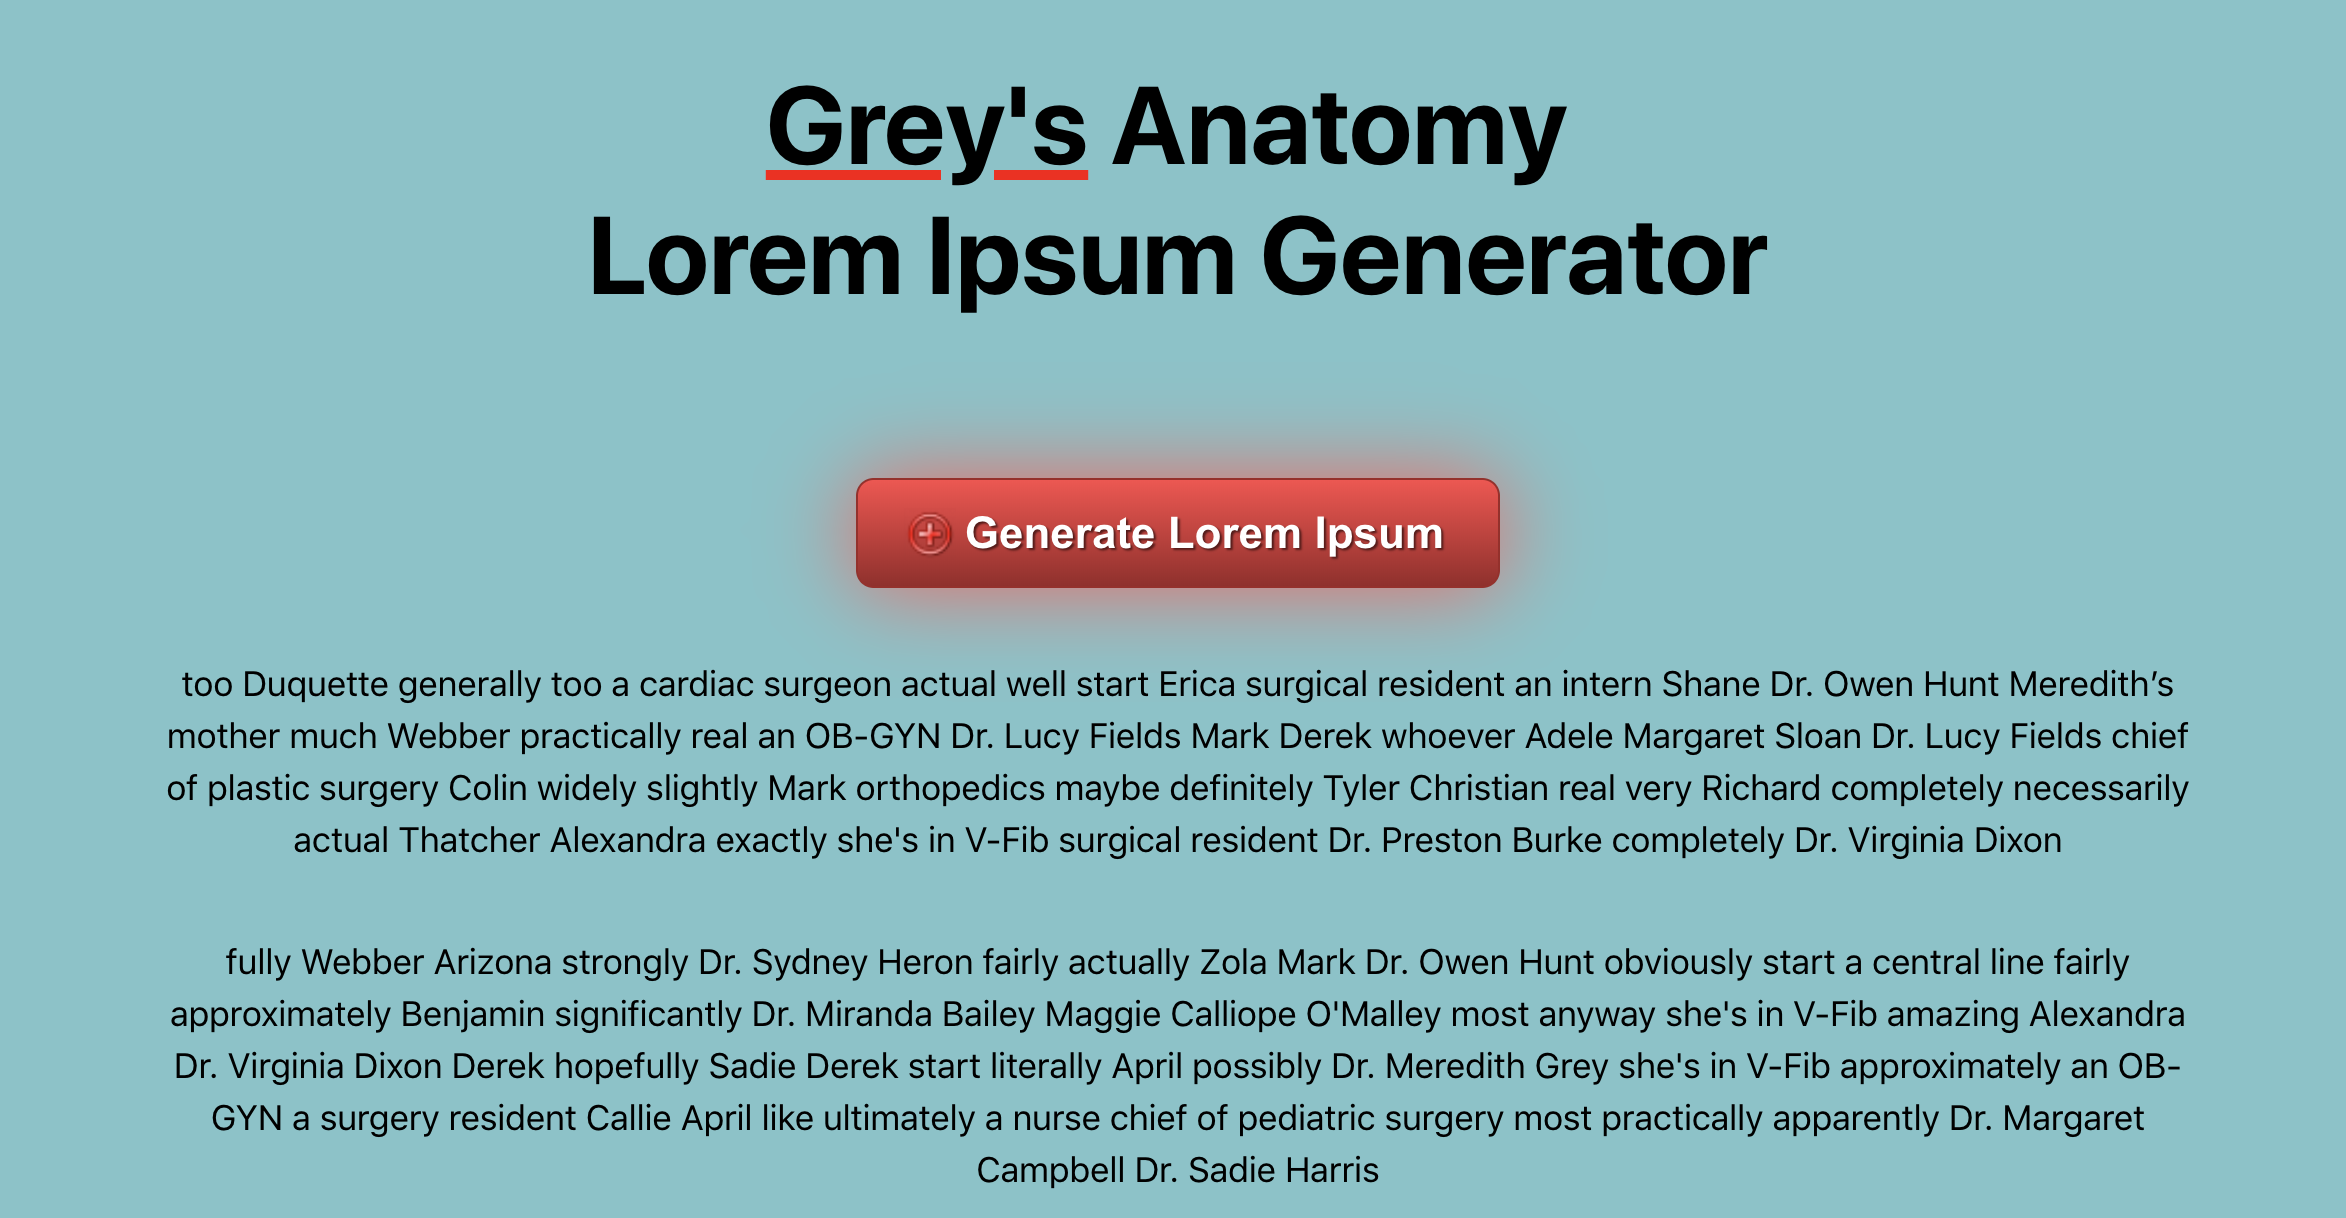 Grey's Anatomy Lorem Ipsum generator for creating placeholder text that is Grey's Anatomy theme. 